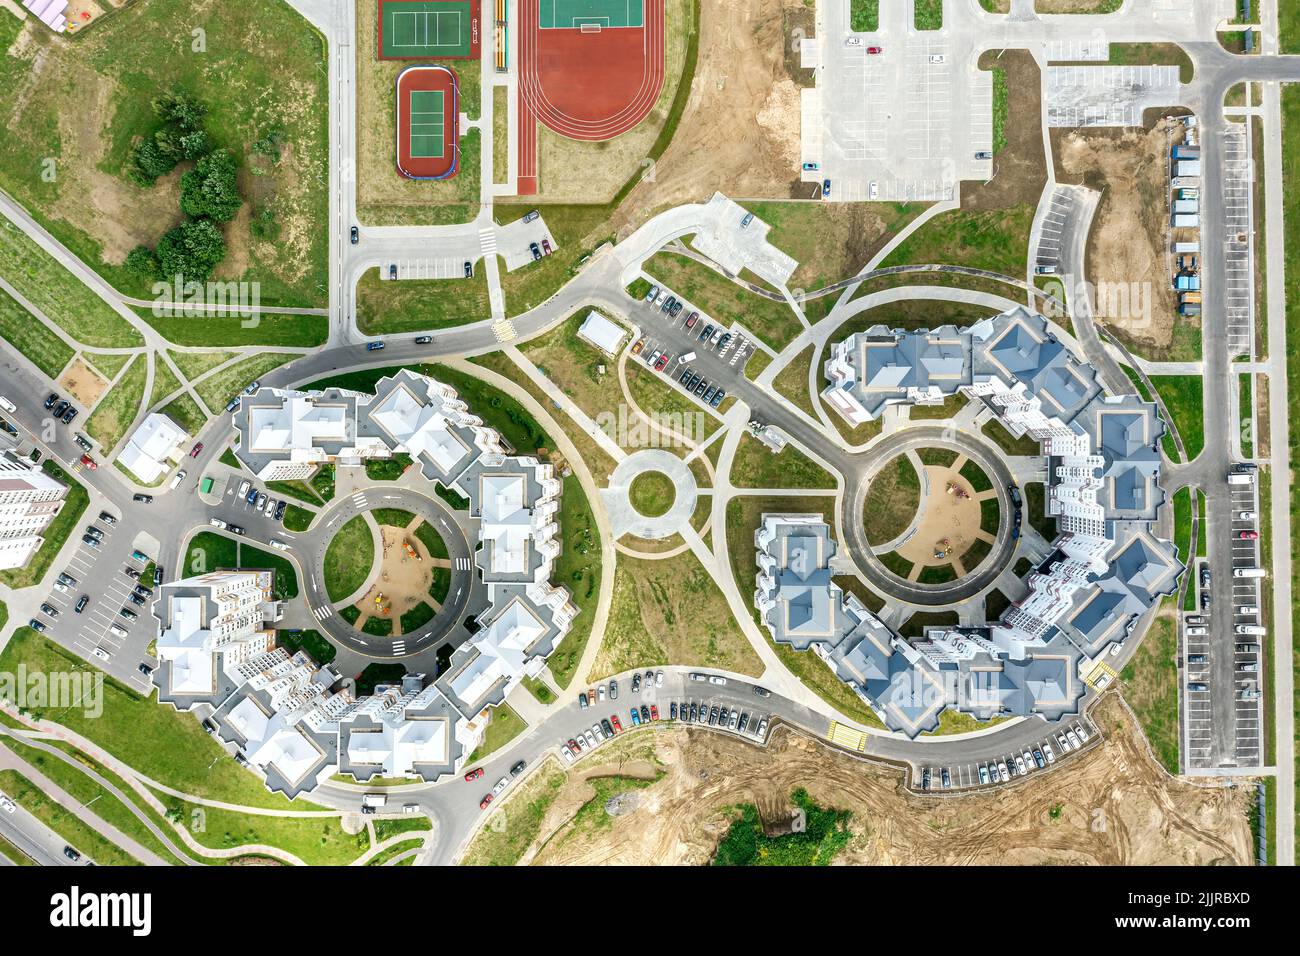 zona residencial con edificios de apartamentos, aparcamientos, coches, parques infantiles. arquitectura urbana moderna. vista superior aérea. Foto de stock